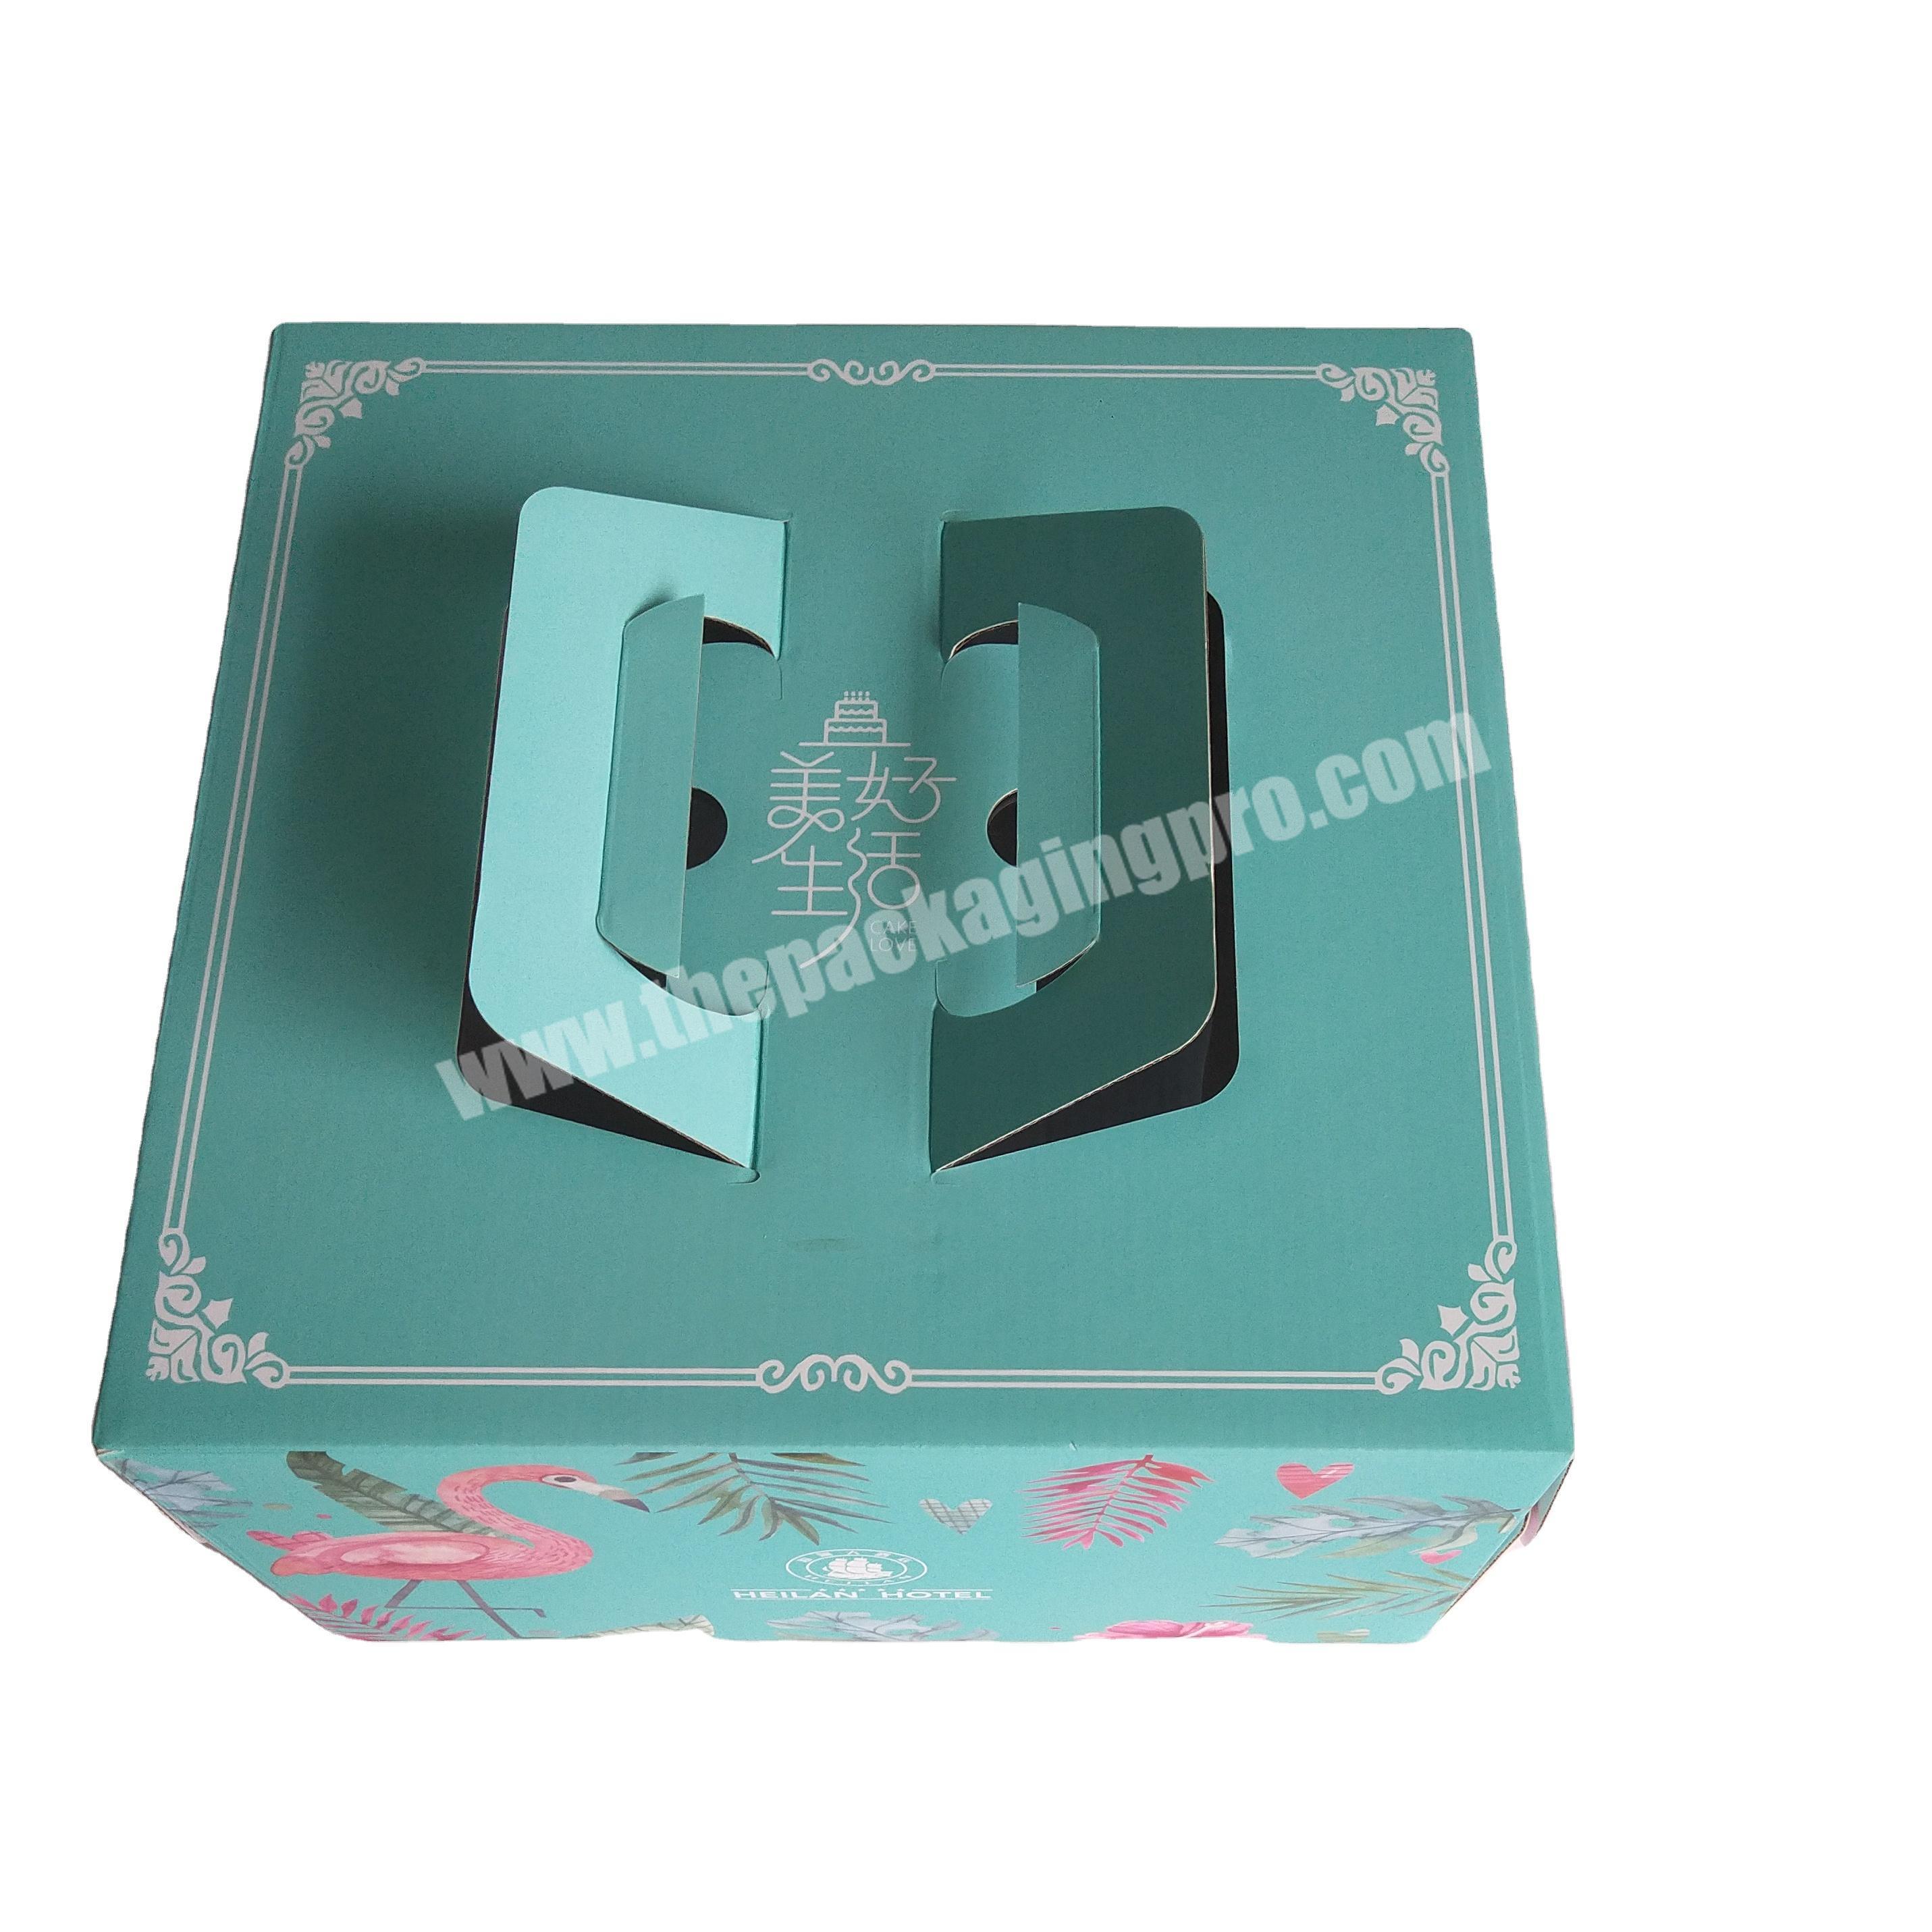 White cardboard 12 inch square cake box